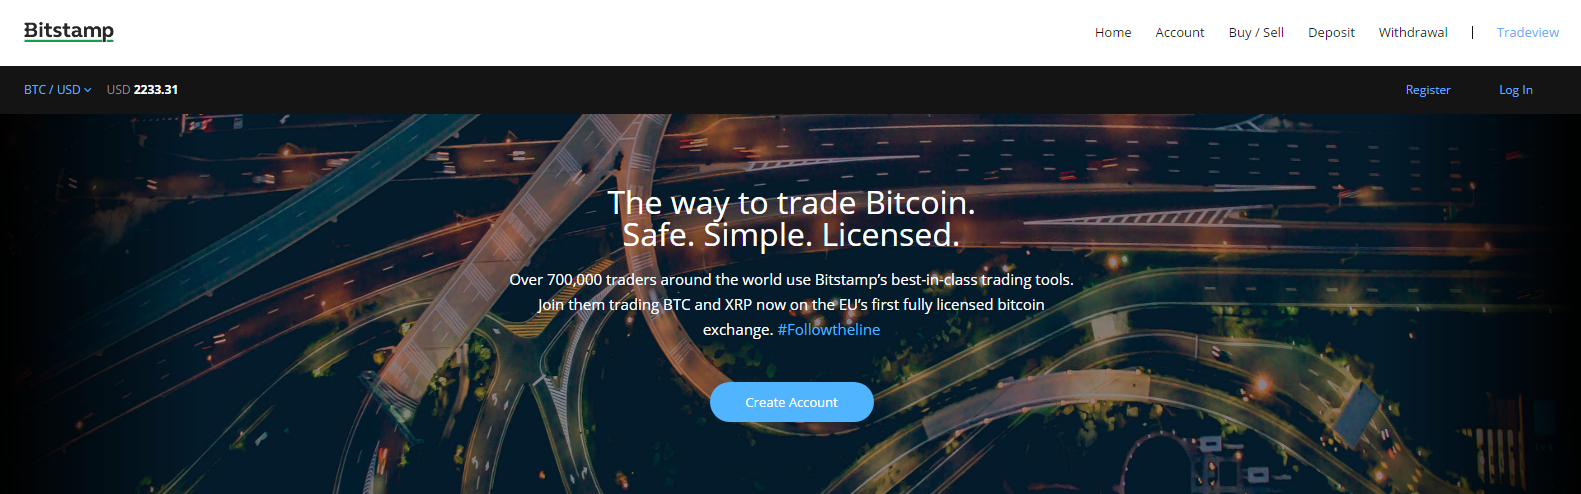 buy ripple with bitcoin bitstamp